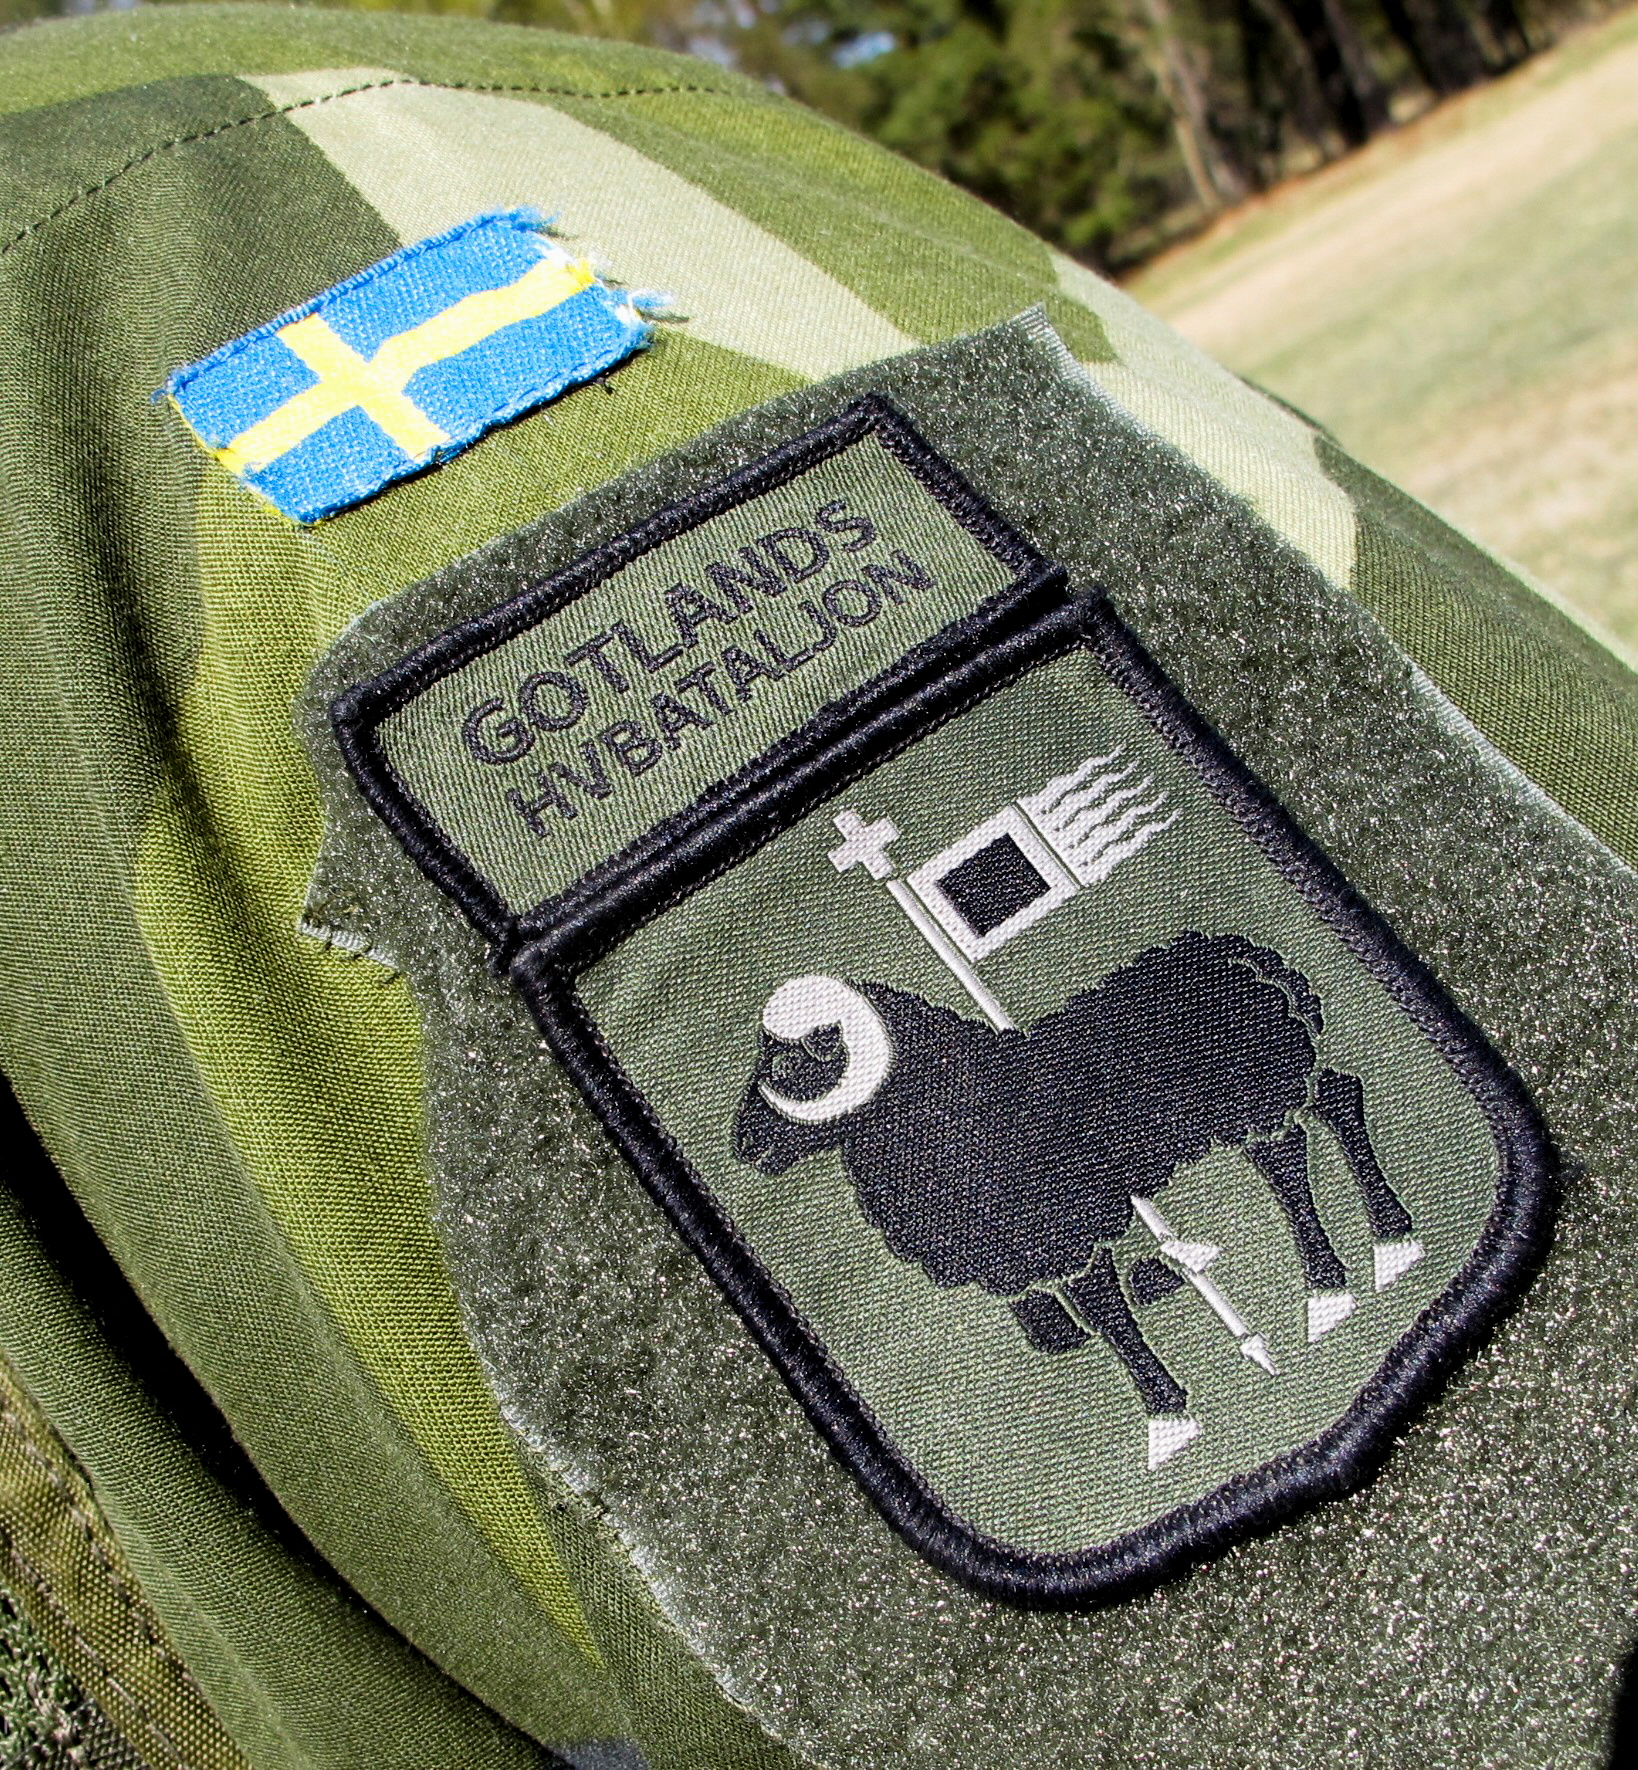 Swedish Home Guard volunteers practice at a shooting range in Gotland